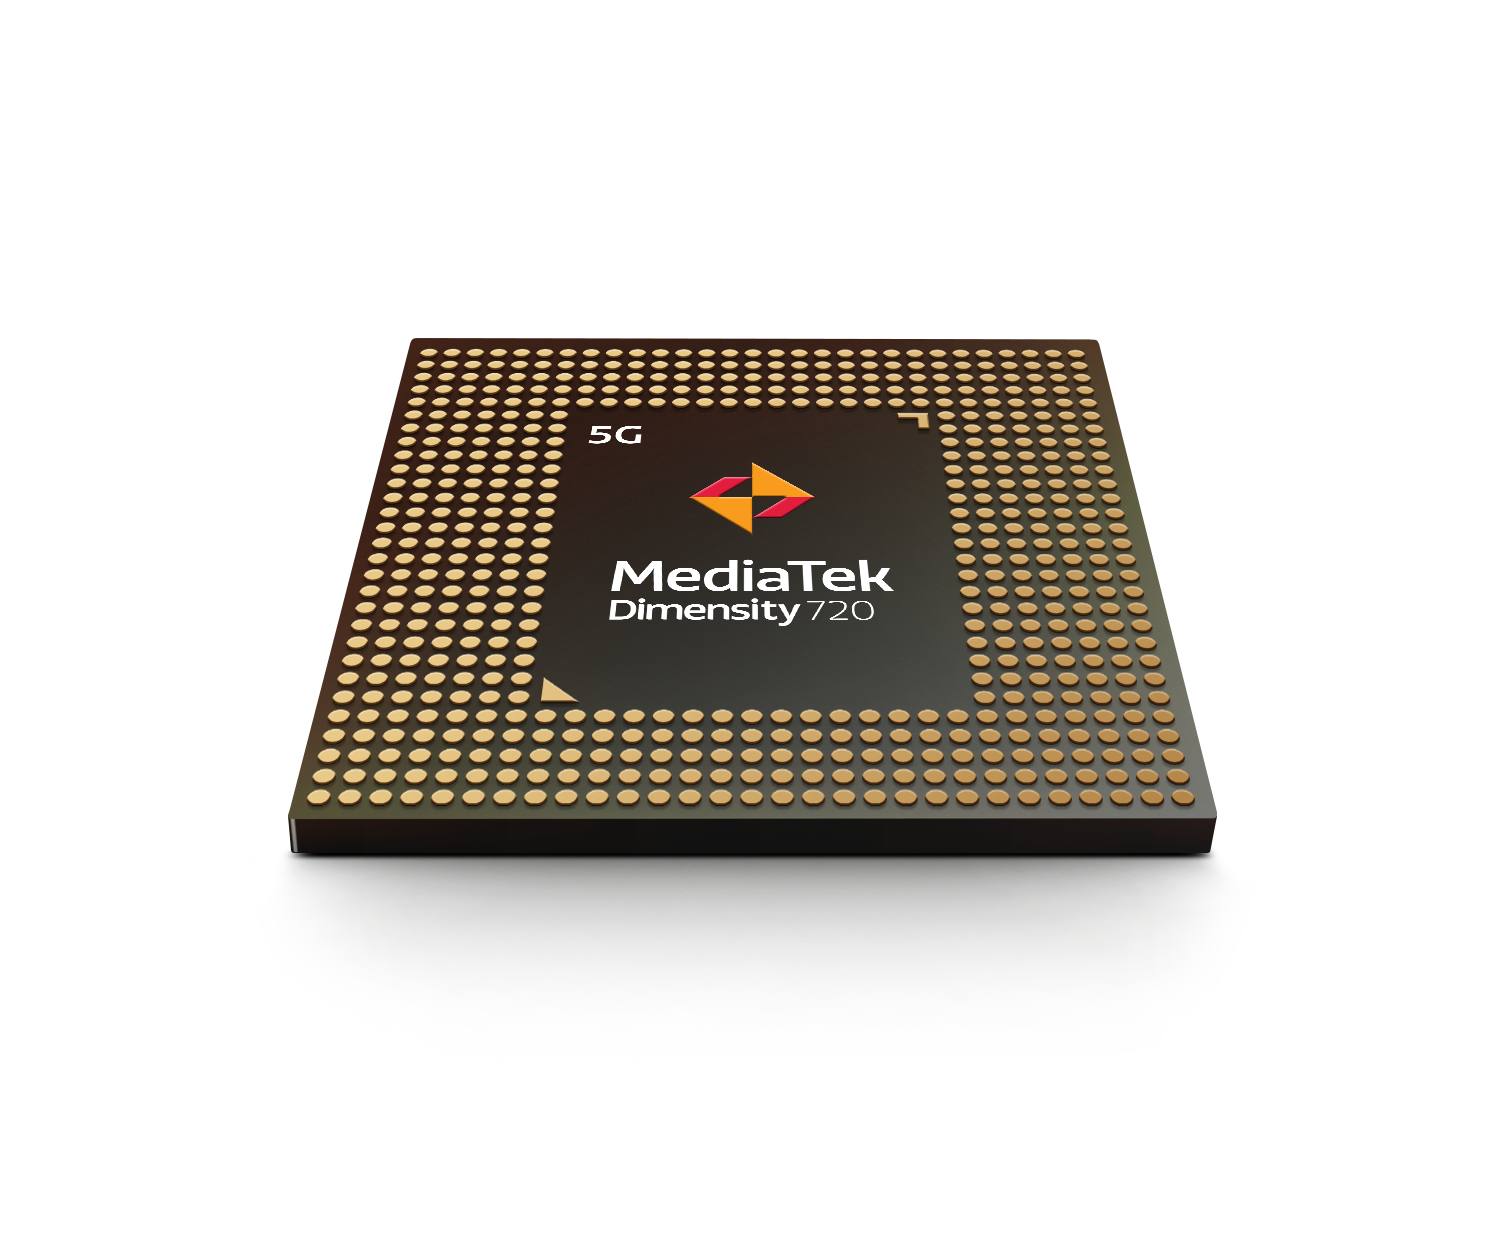 mediatek-dimensity-720-making-5g-phones-affordable-and-long-lasting